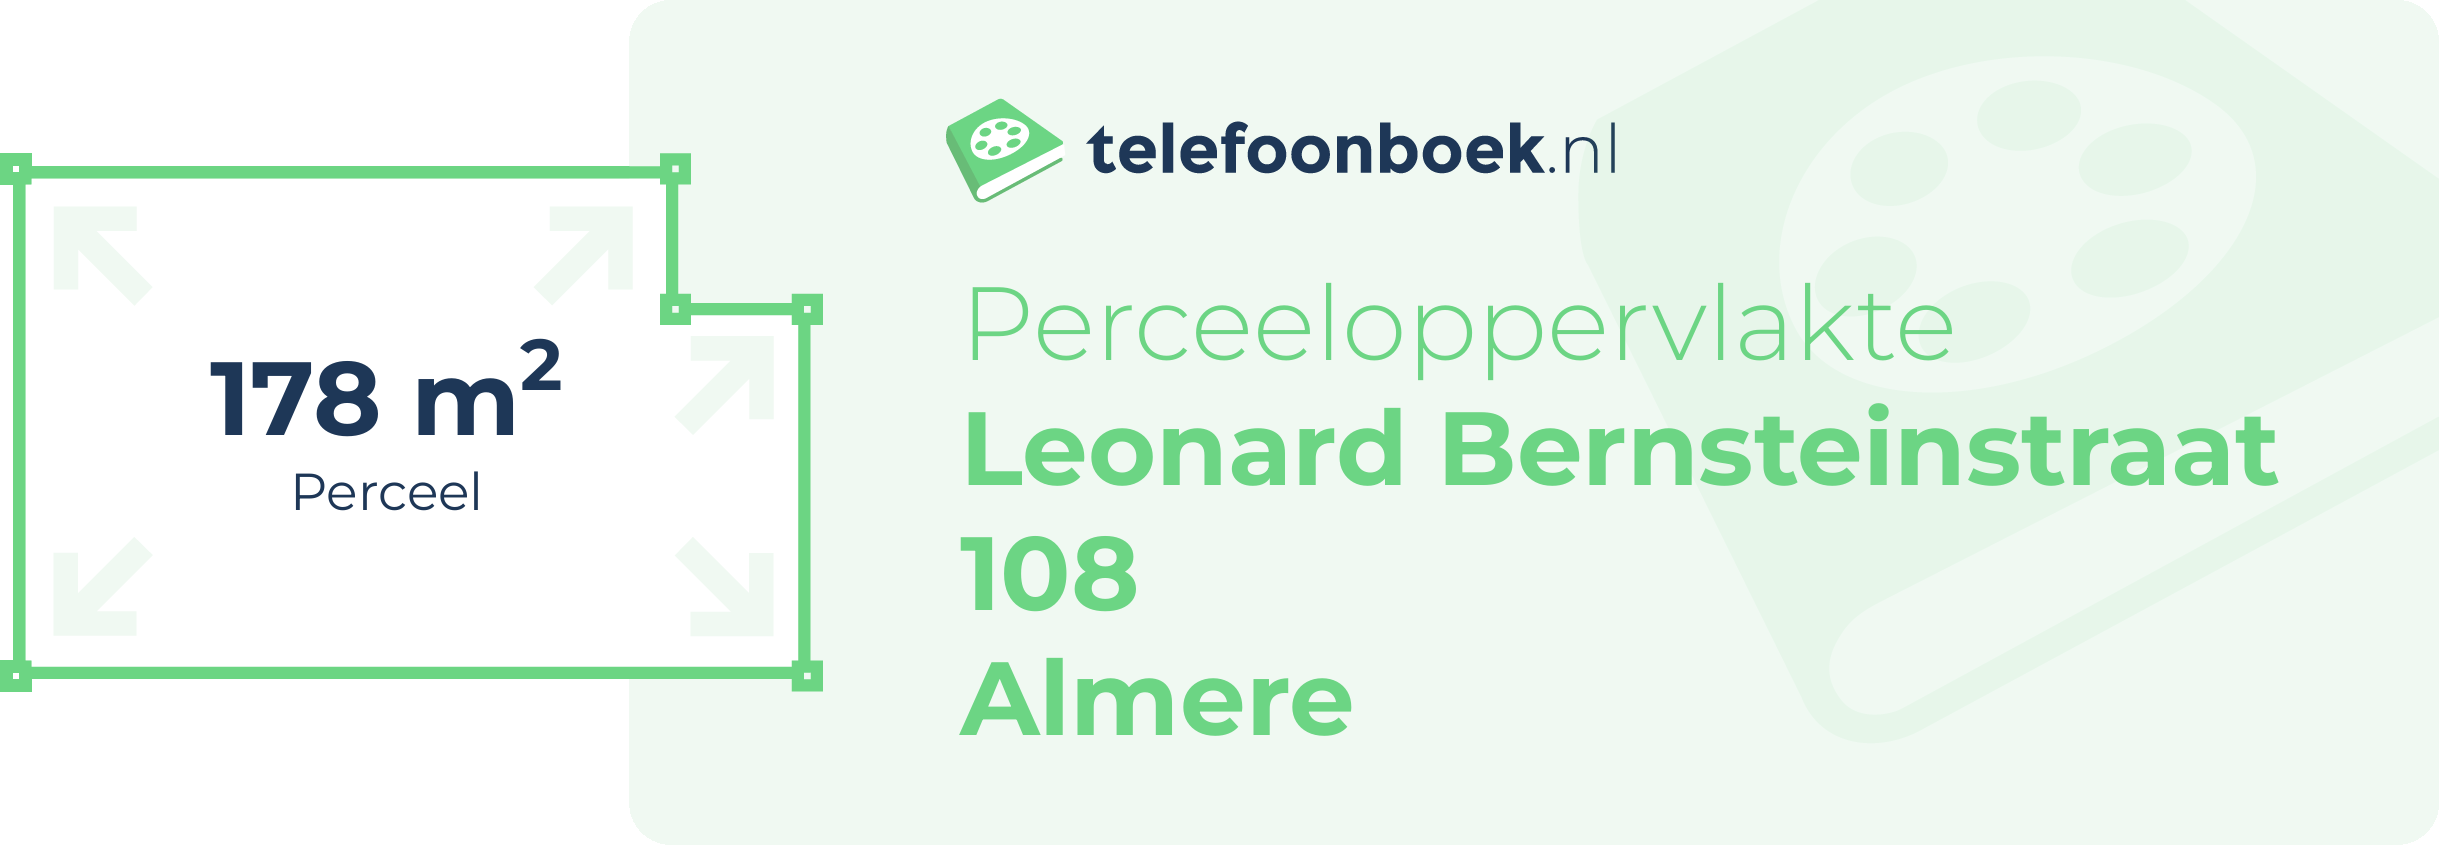 Perceeloppervlakte Leonard Bernsteinstraat 108 Almere